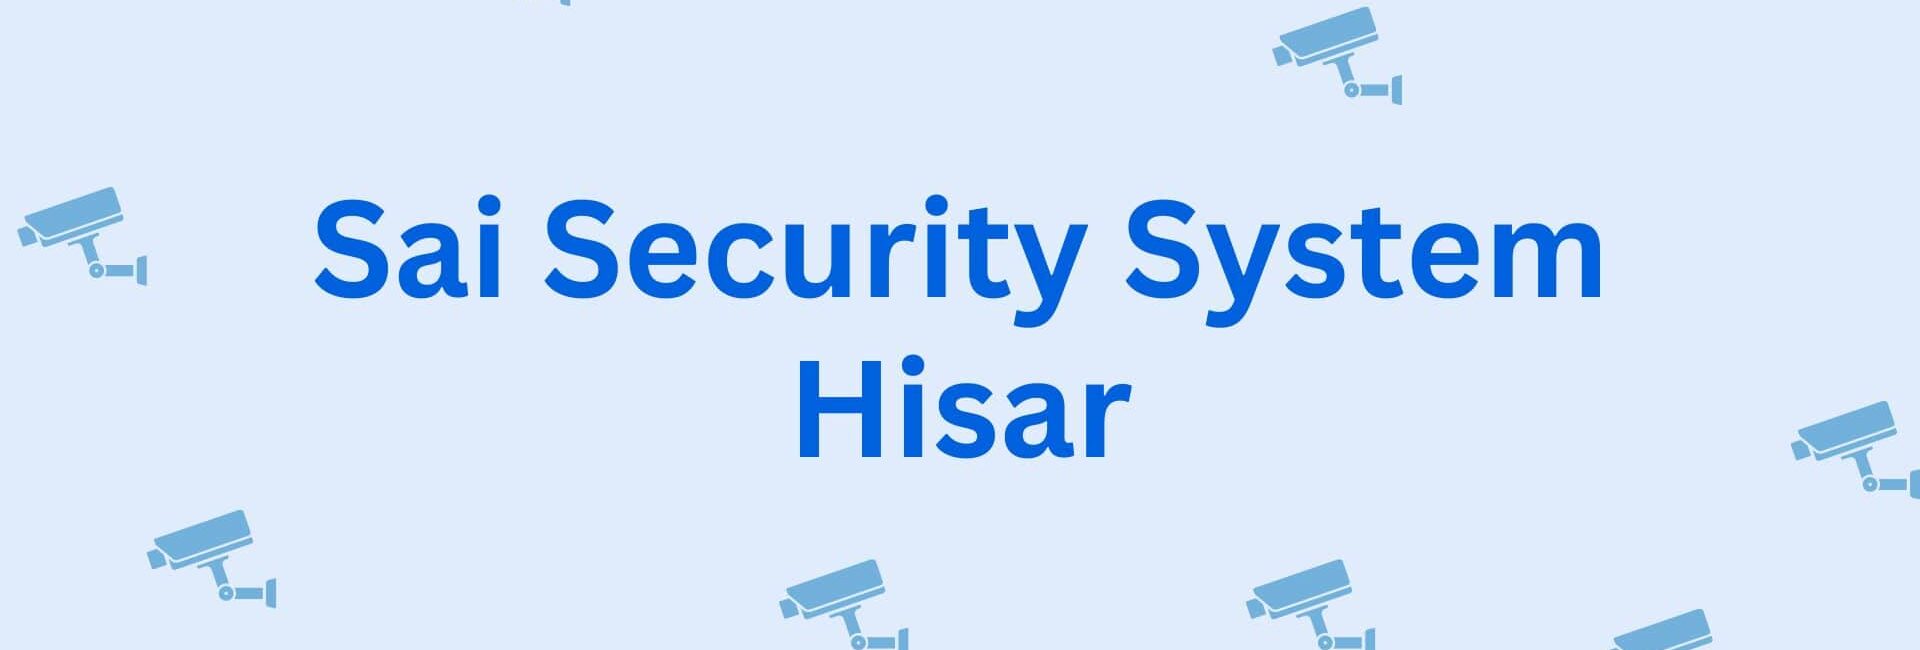 Sai Security System Hisar - Security Service in Hisar